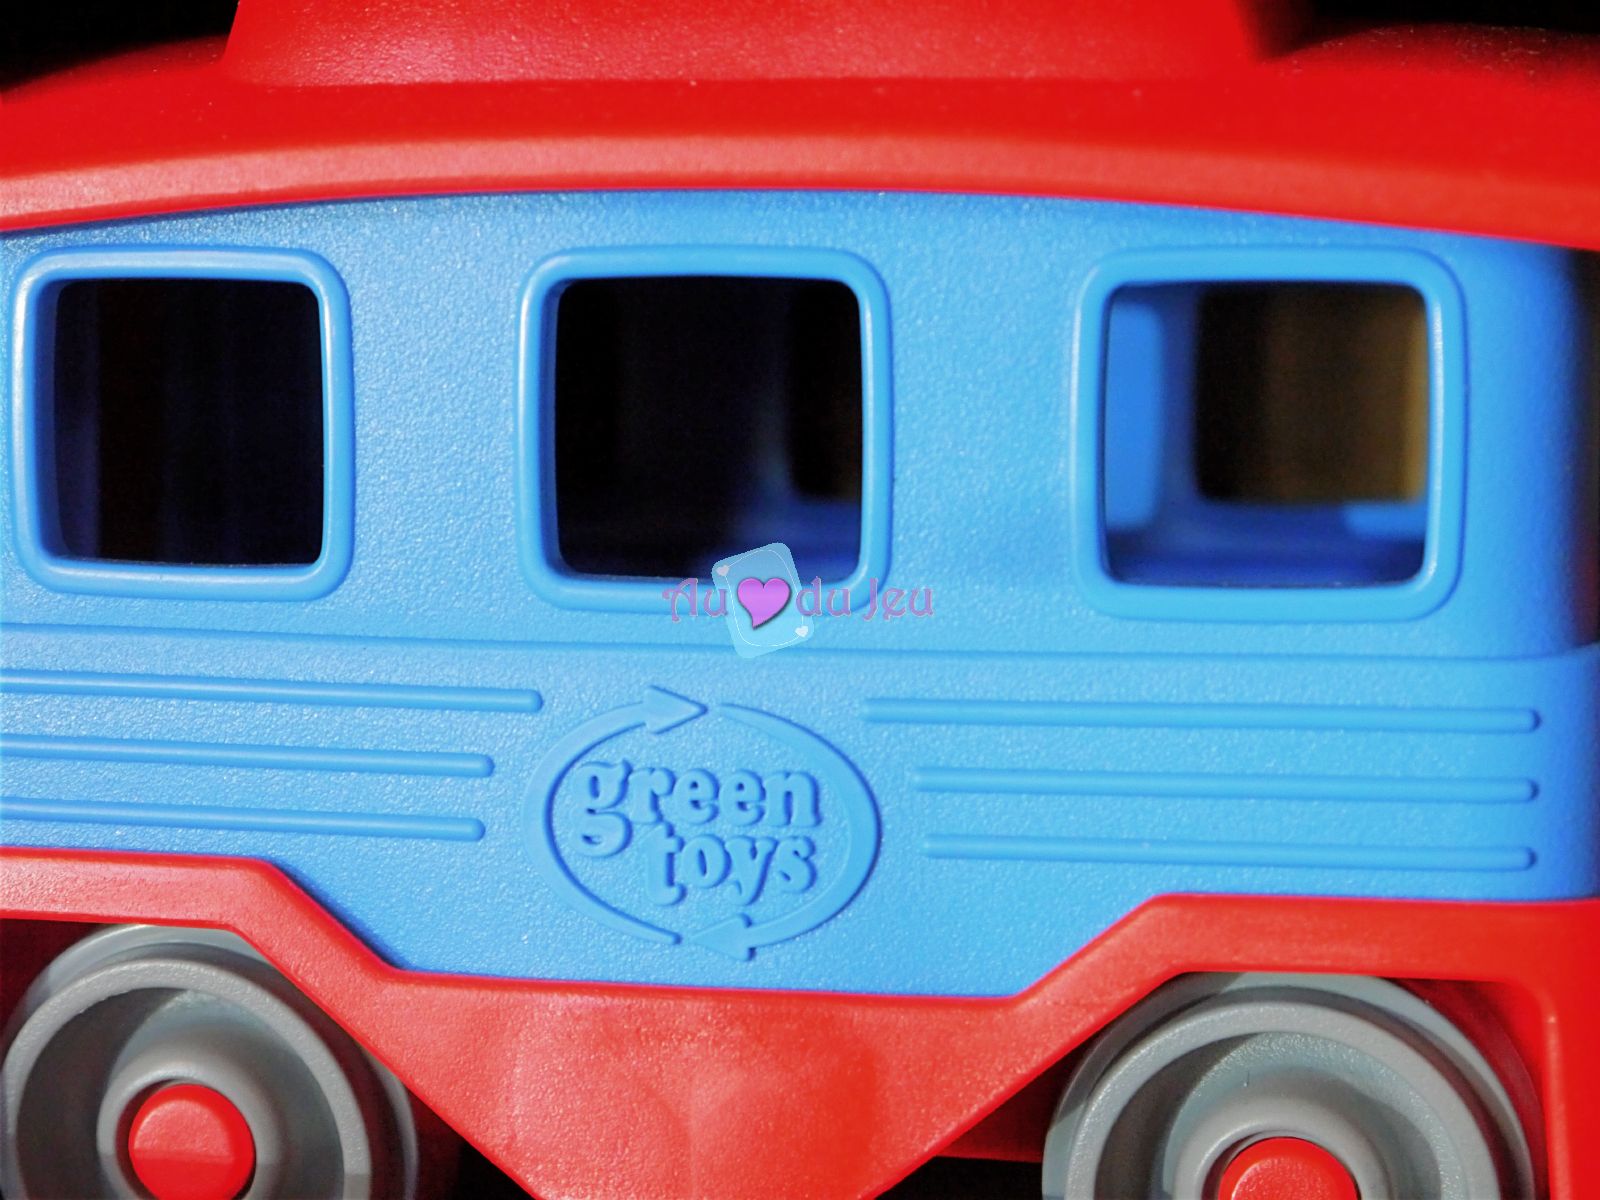 Green Toys - Train Bleu